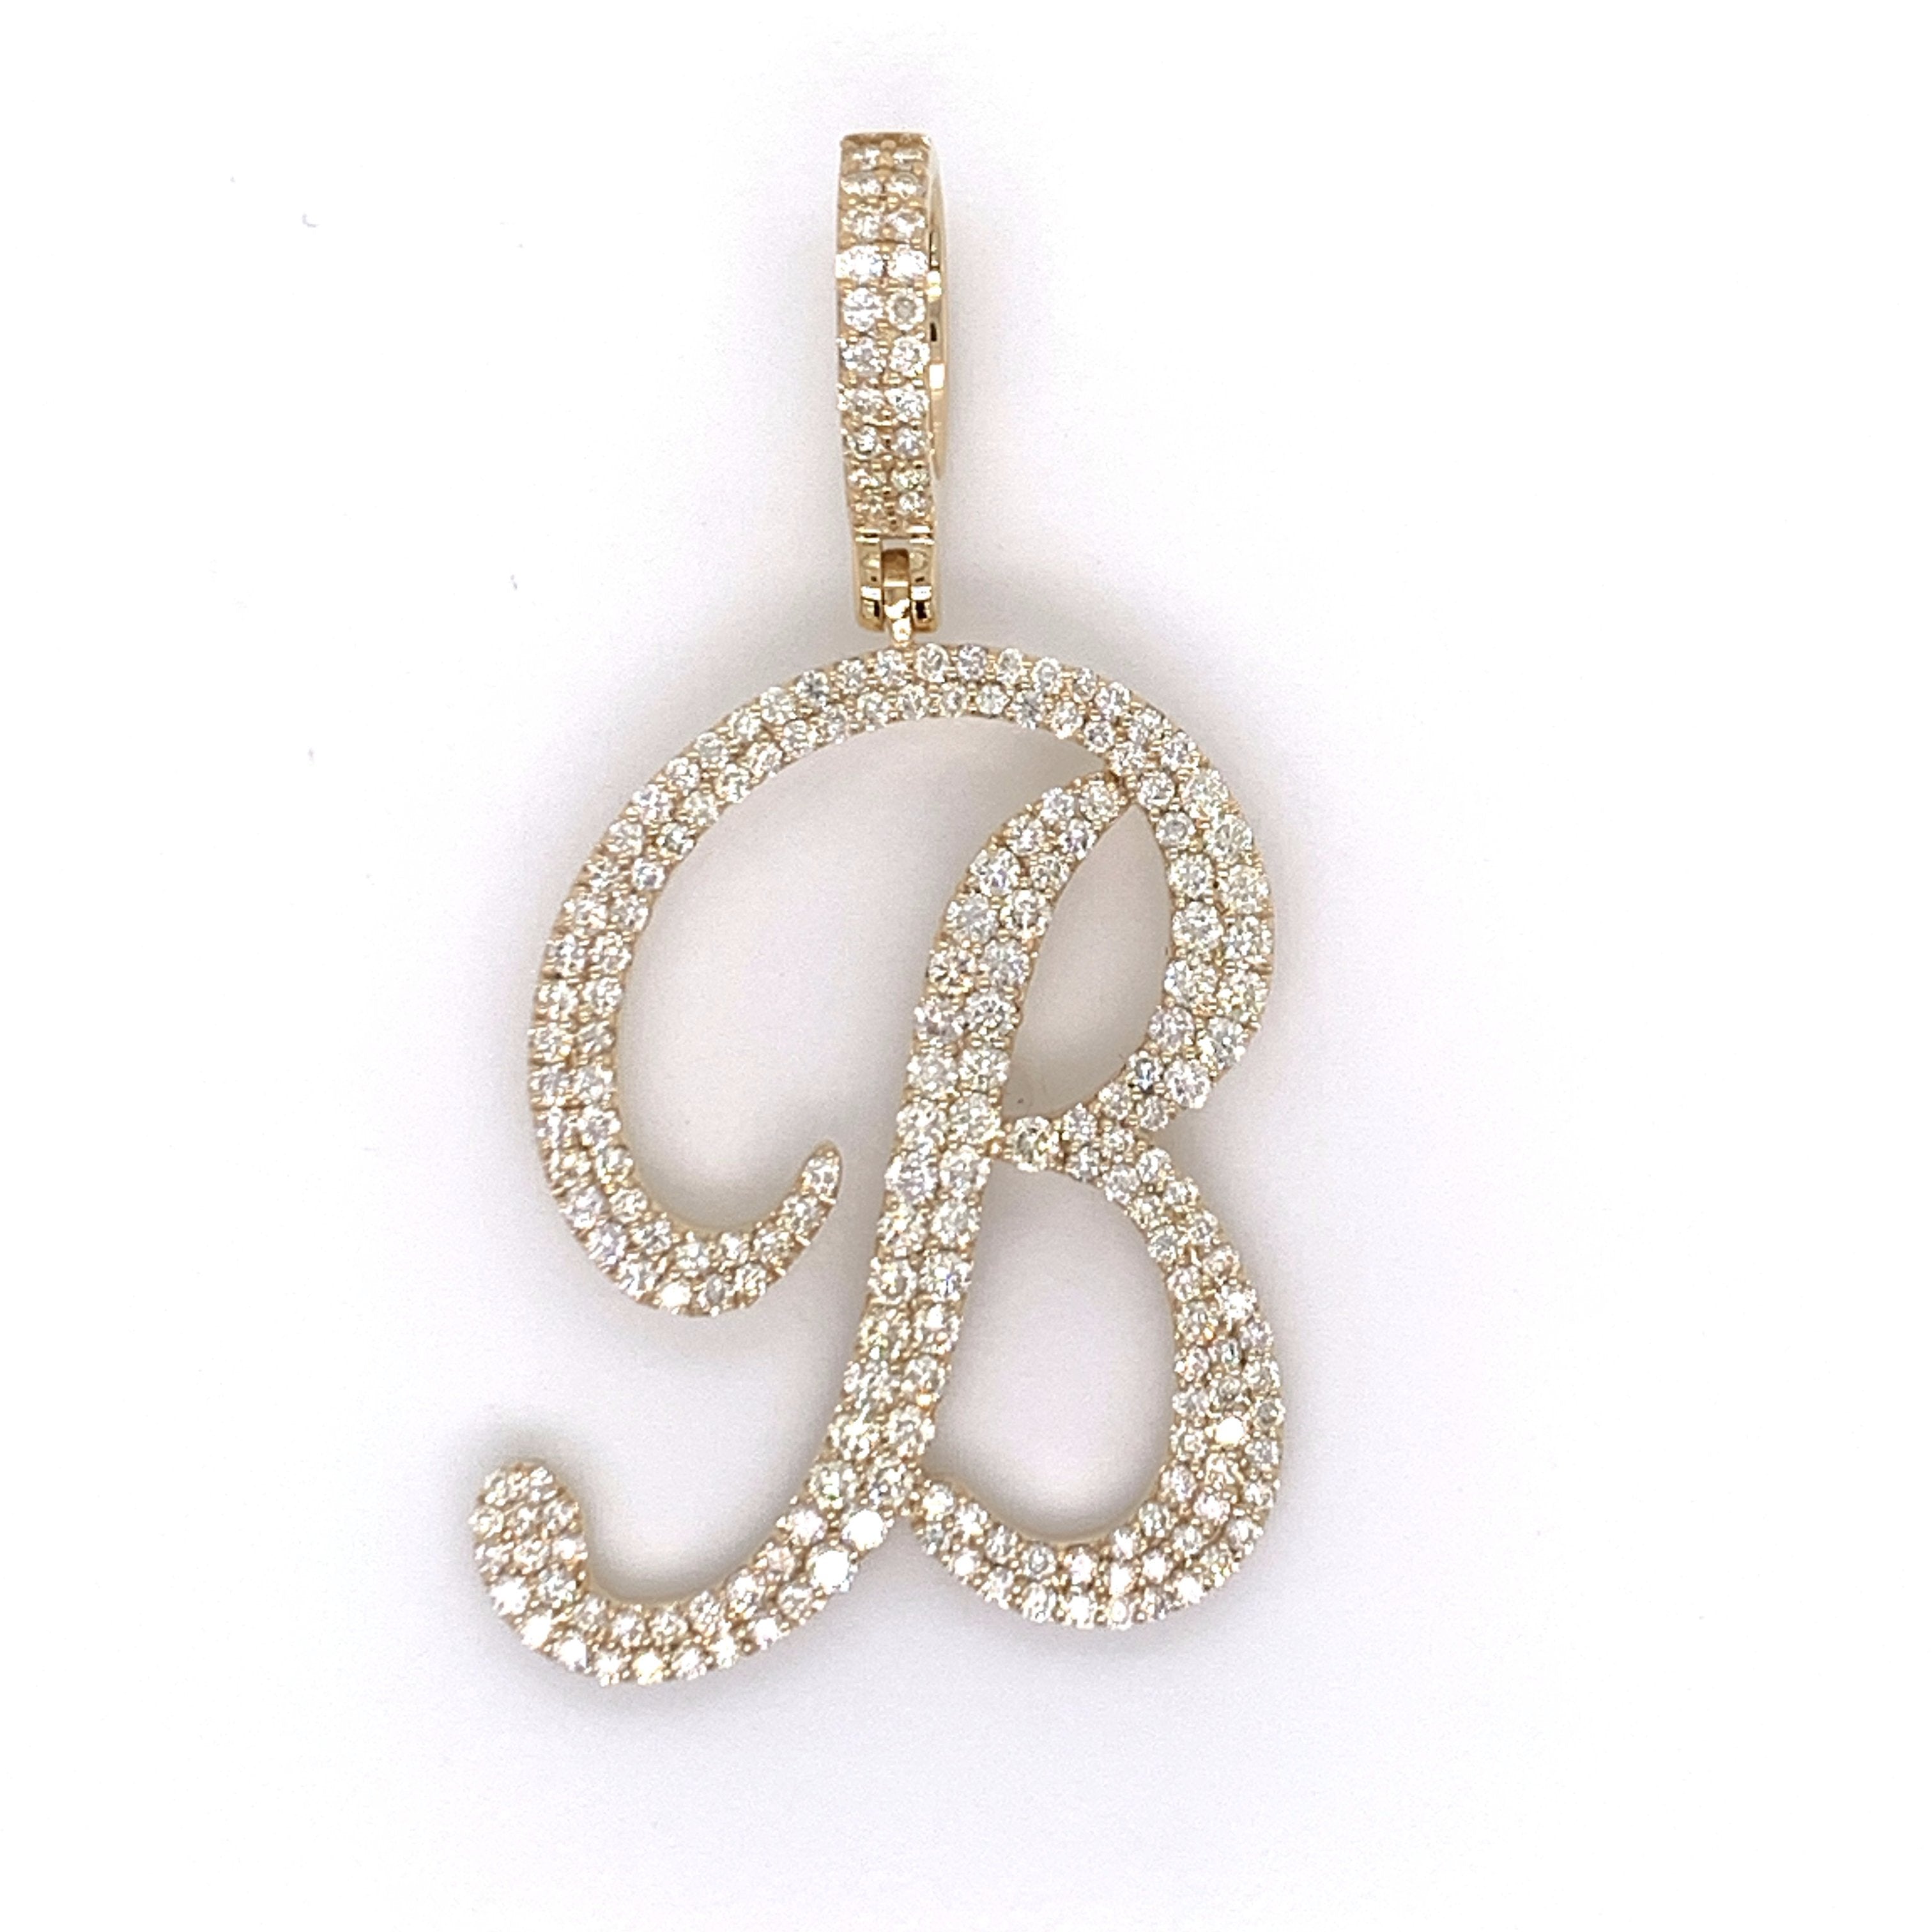 2.50 CT. Diamond Initial "B" Pendant in Gold With Chain - White Carat Diamonds 